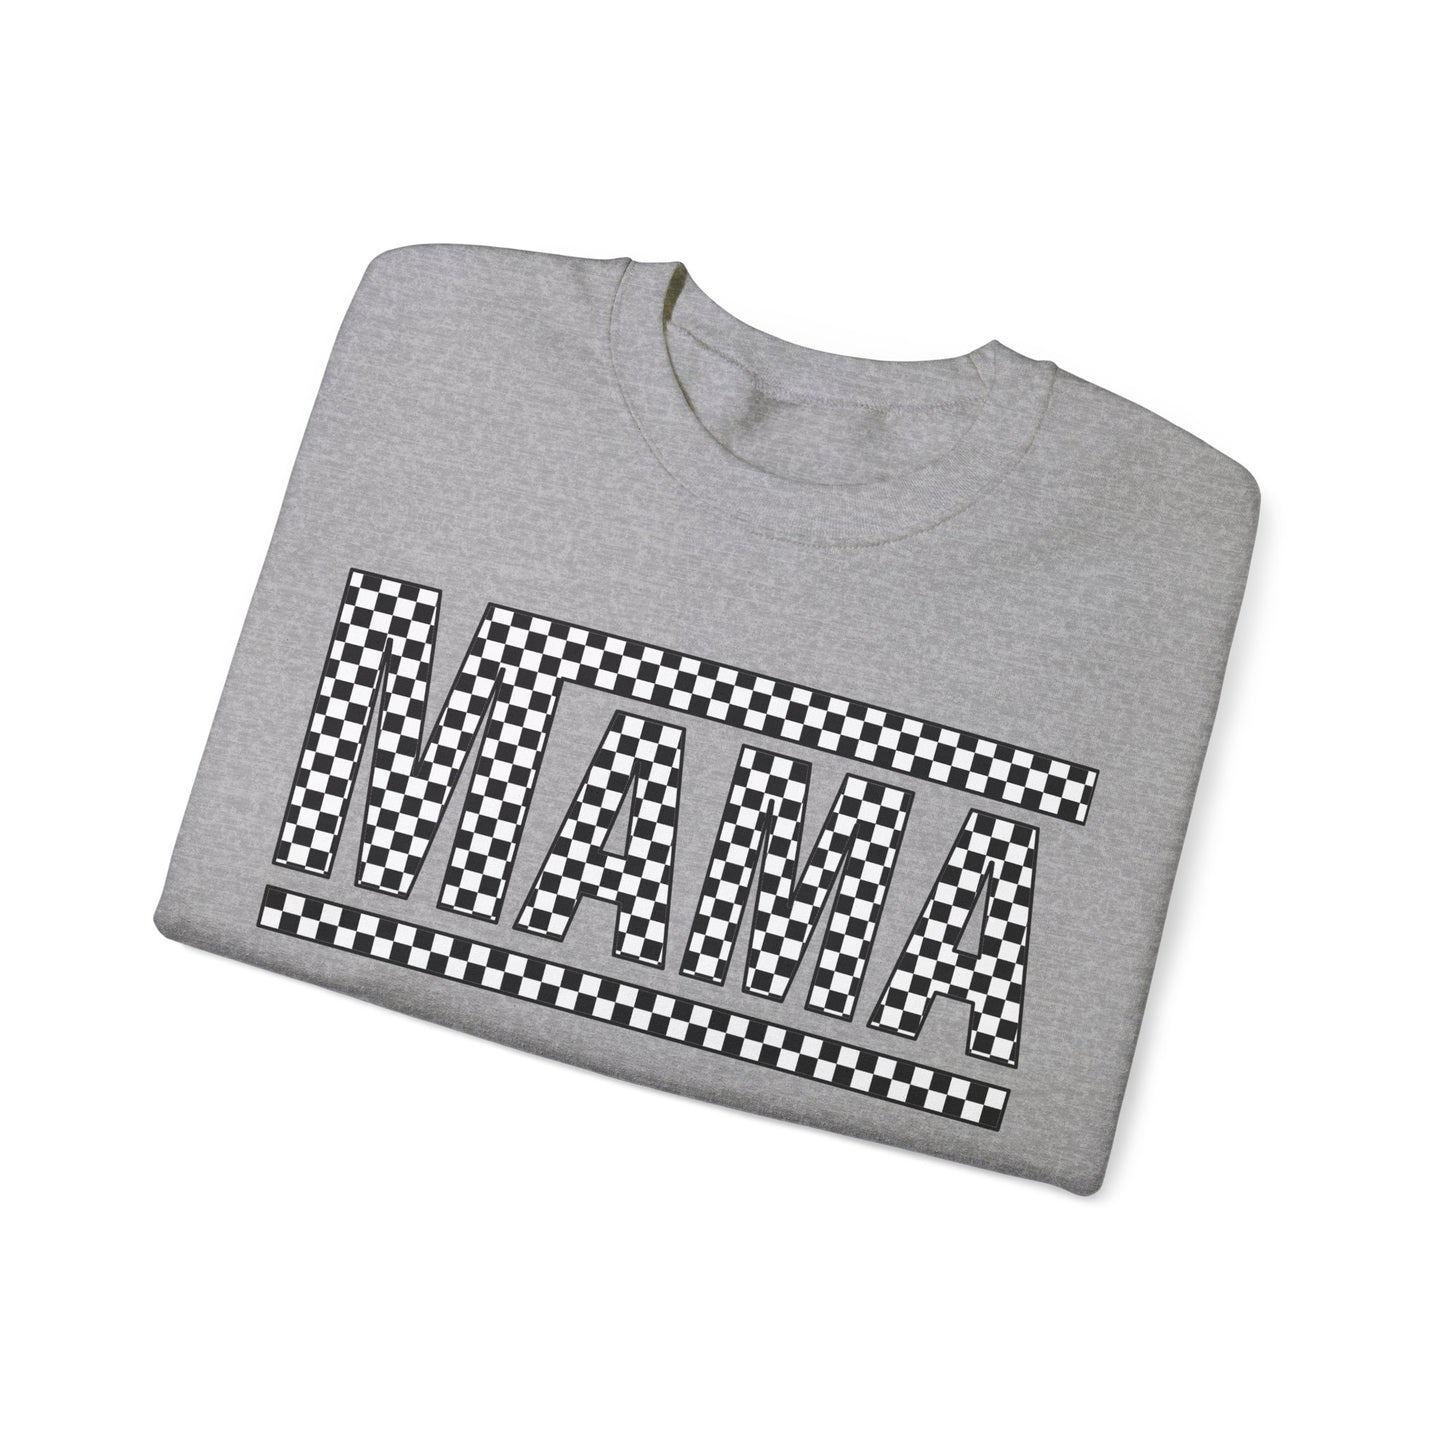 MAMA Checkered - Crewneck Sweatshirt